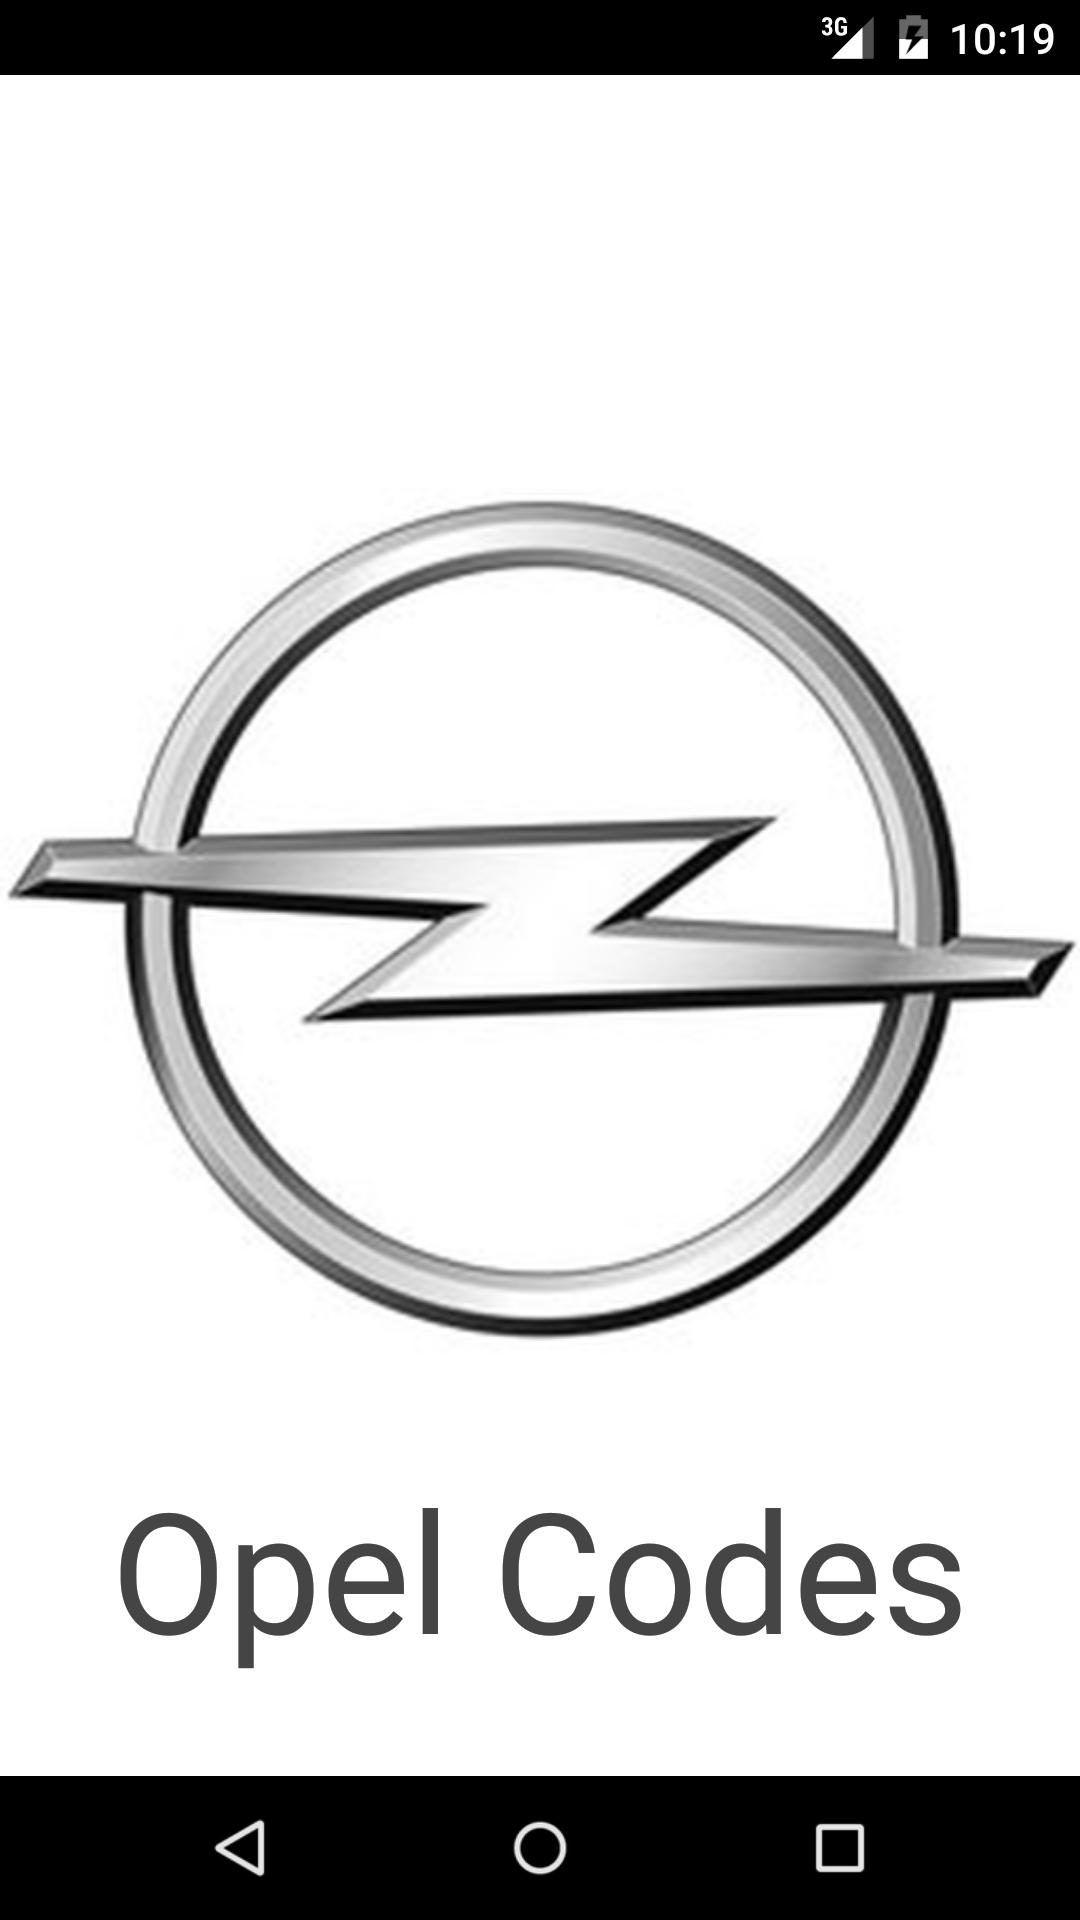 Opel code. Opel logo. Код 16 Опель. Логотип Опель для магнитолы андроид. Опель код 3.